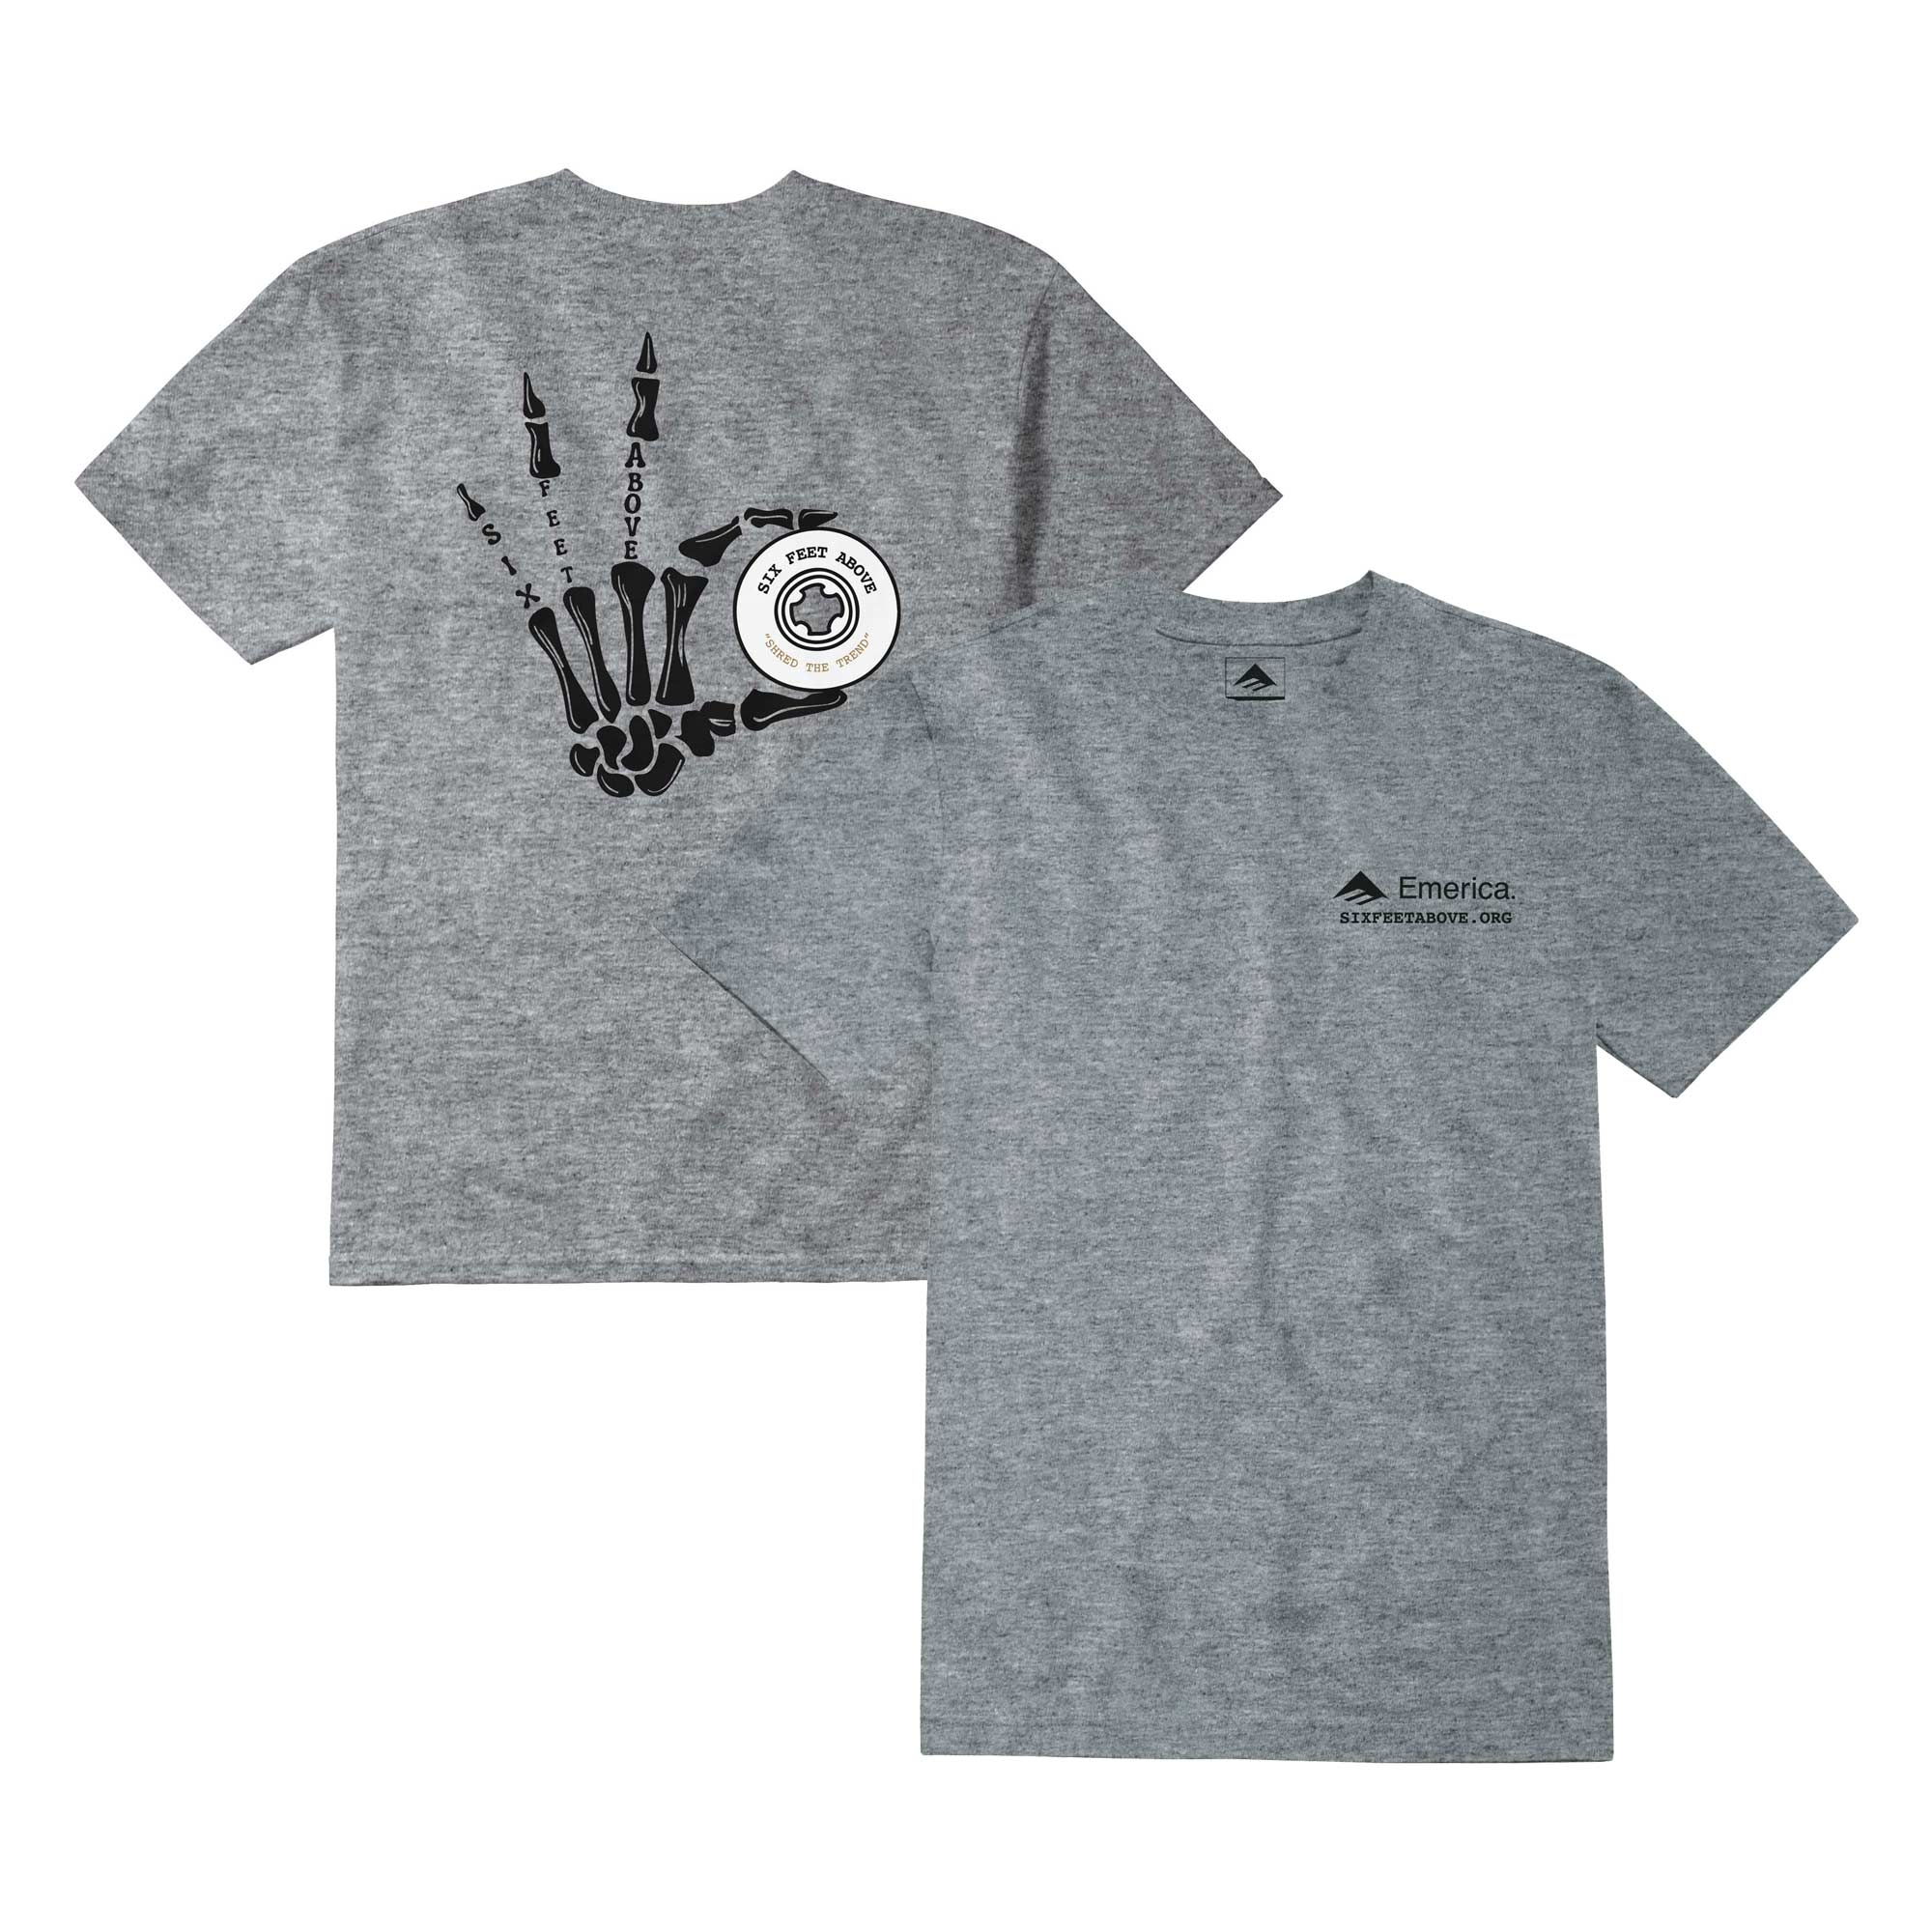 EMERICA T-Shirt 6 FEET ABOVE SKELETON grey/heather